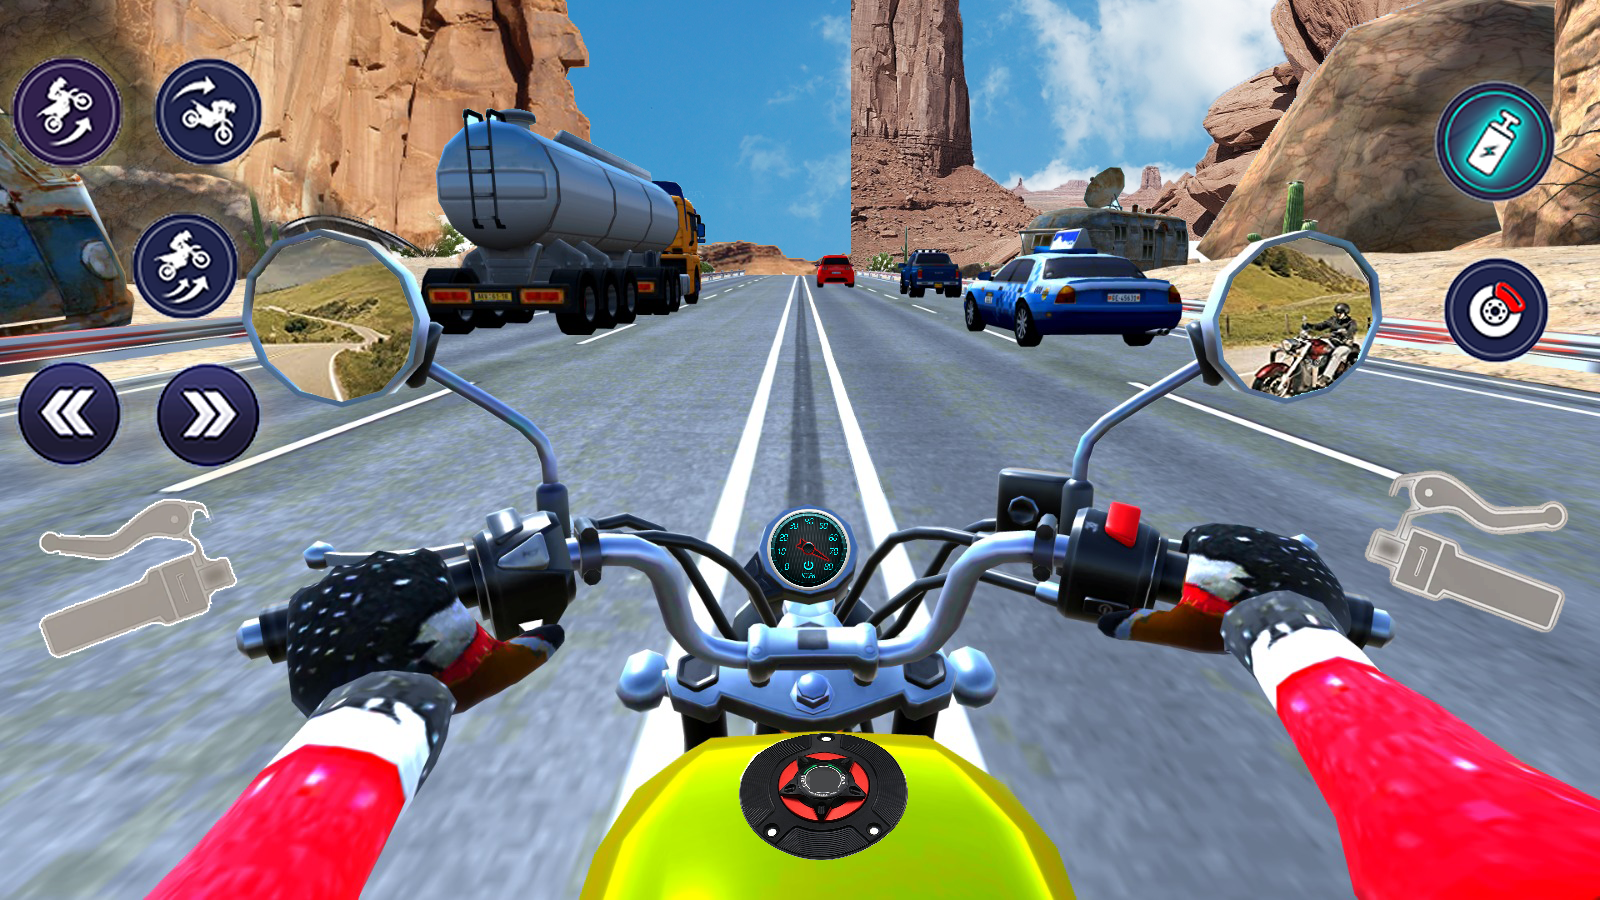 Download do APK de Bicicleta corrida jogos 3D para Android